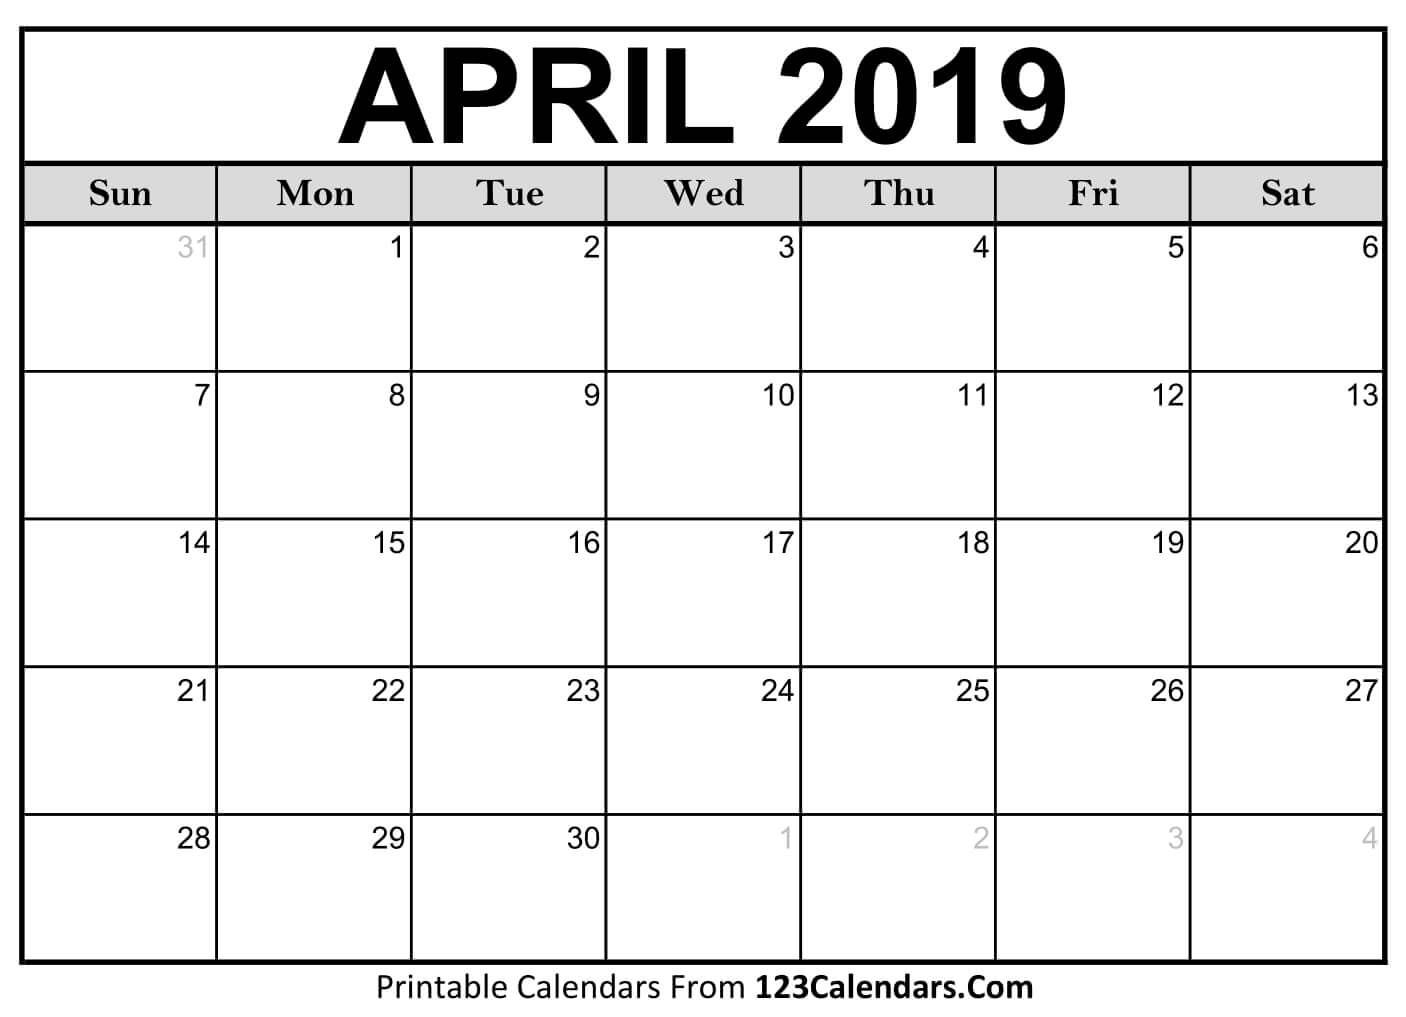 Printable April 2019 Calendar Templates  123Calendars Catch with regard to Printable Calendars From 123Calendars